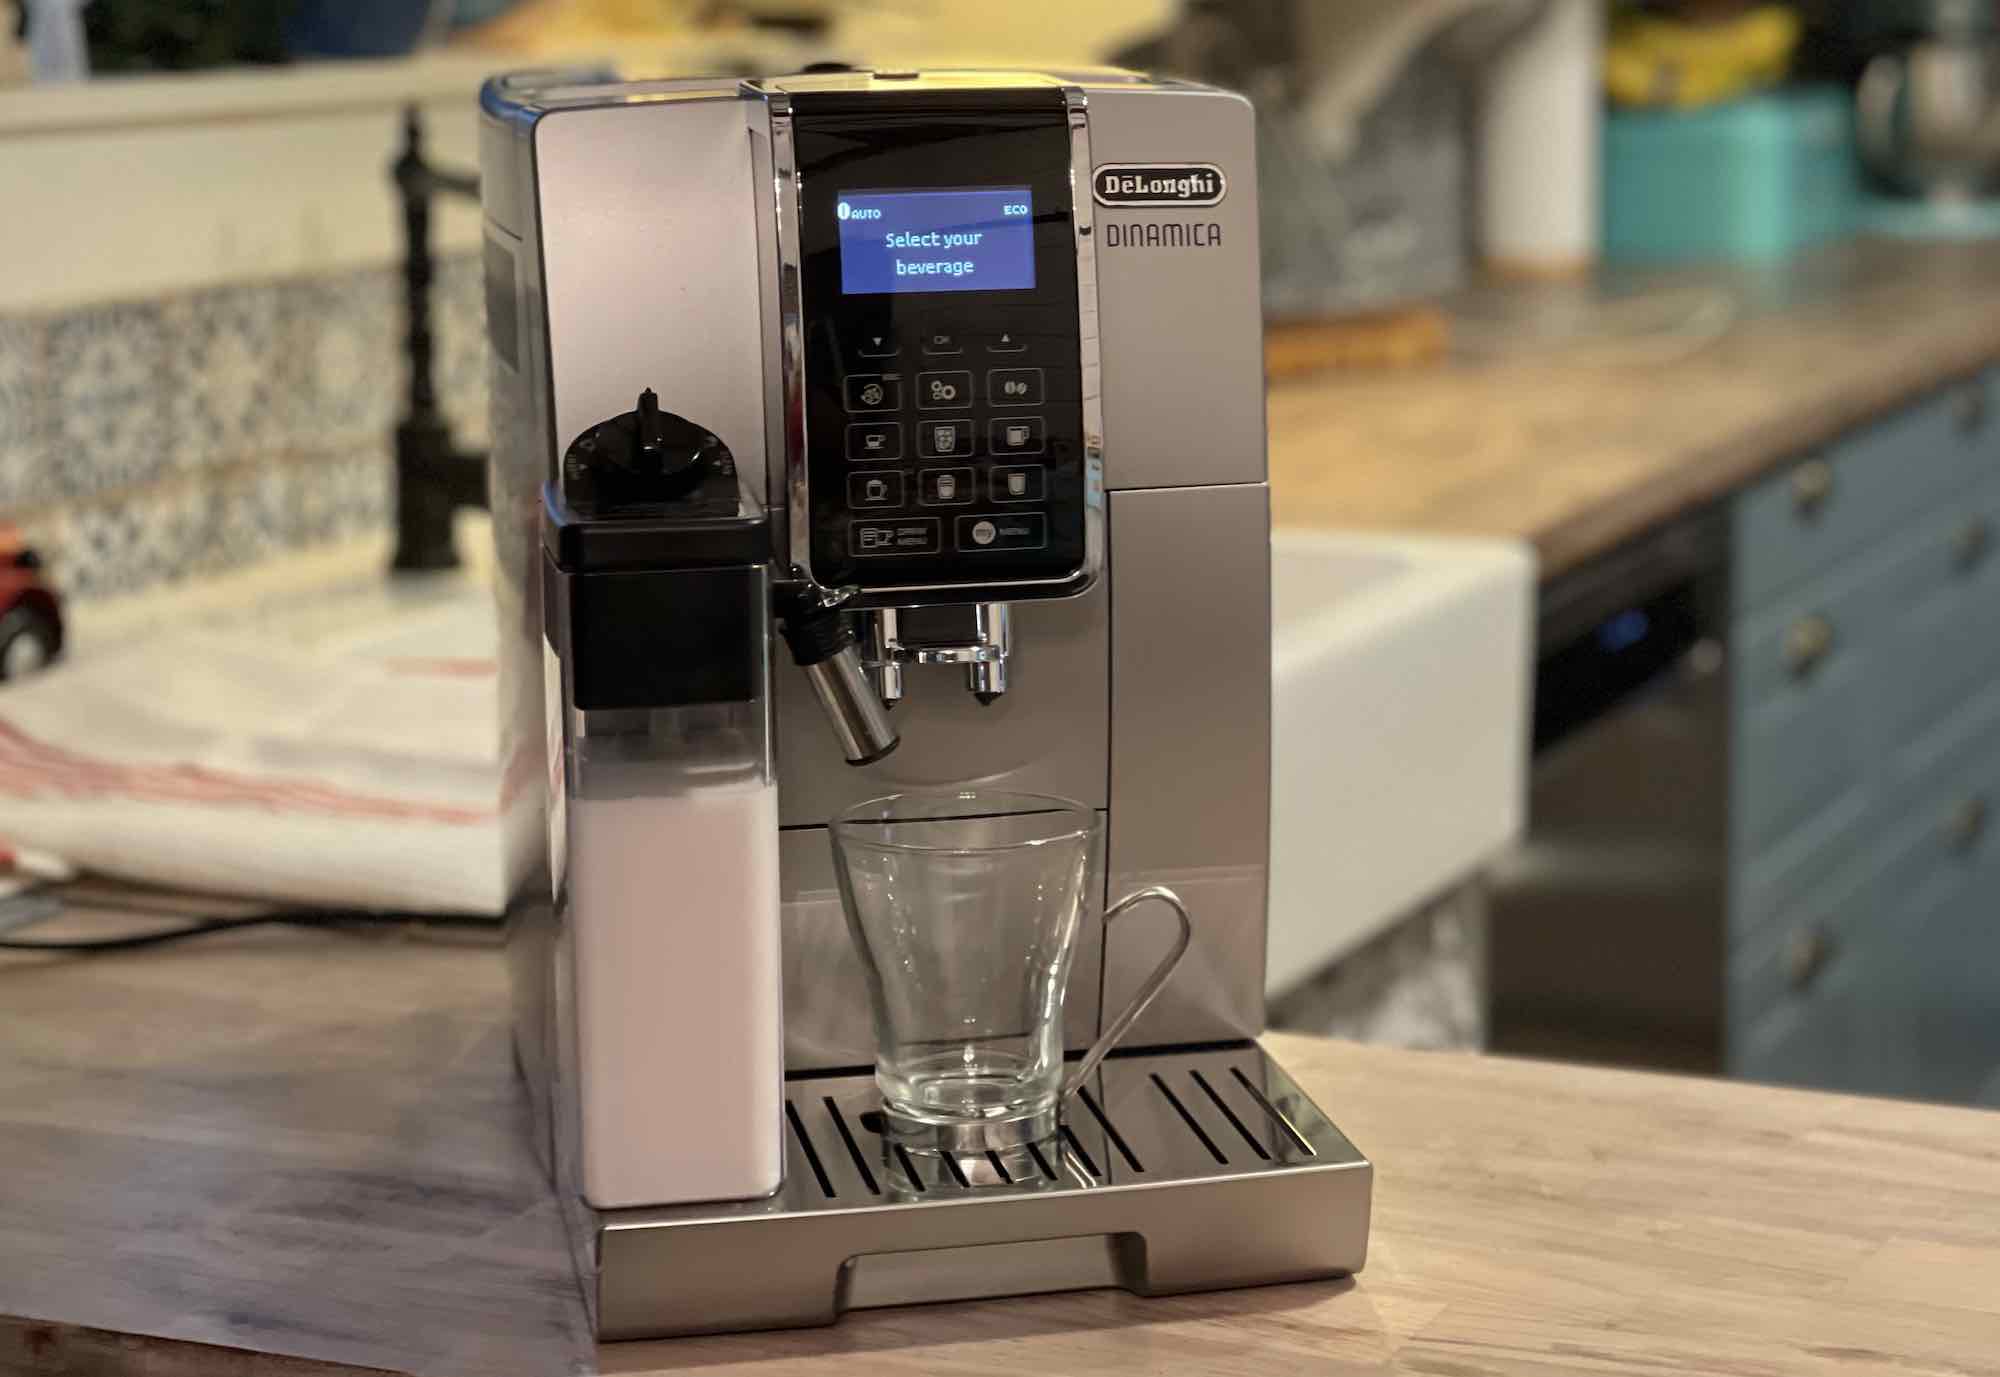 De'Longhi Dinamica Automatic Espresso Machine with LatteCrema Milk Frother Review